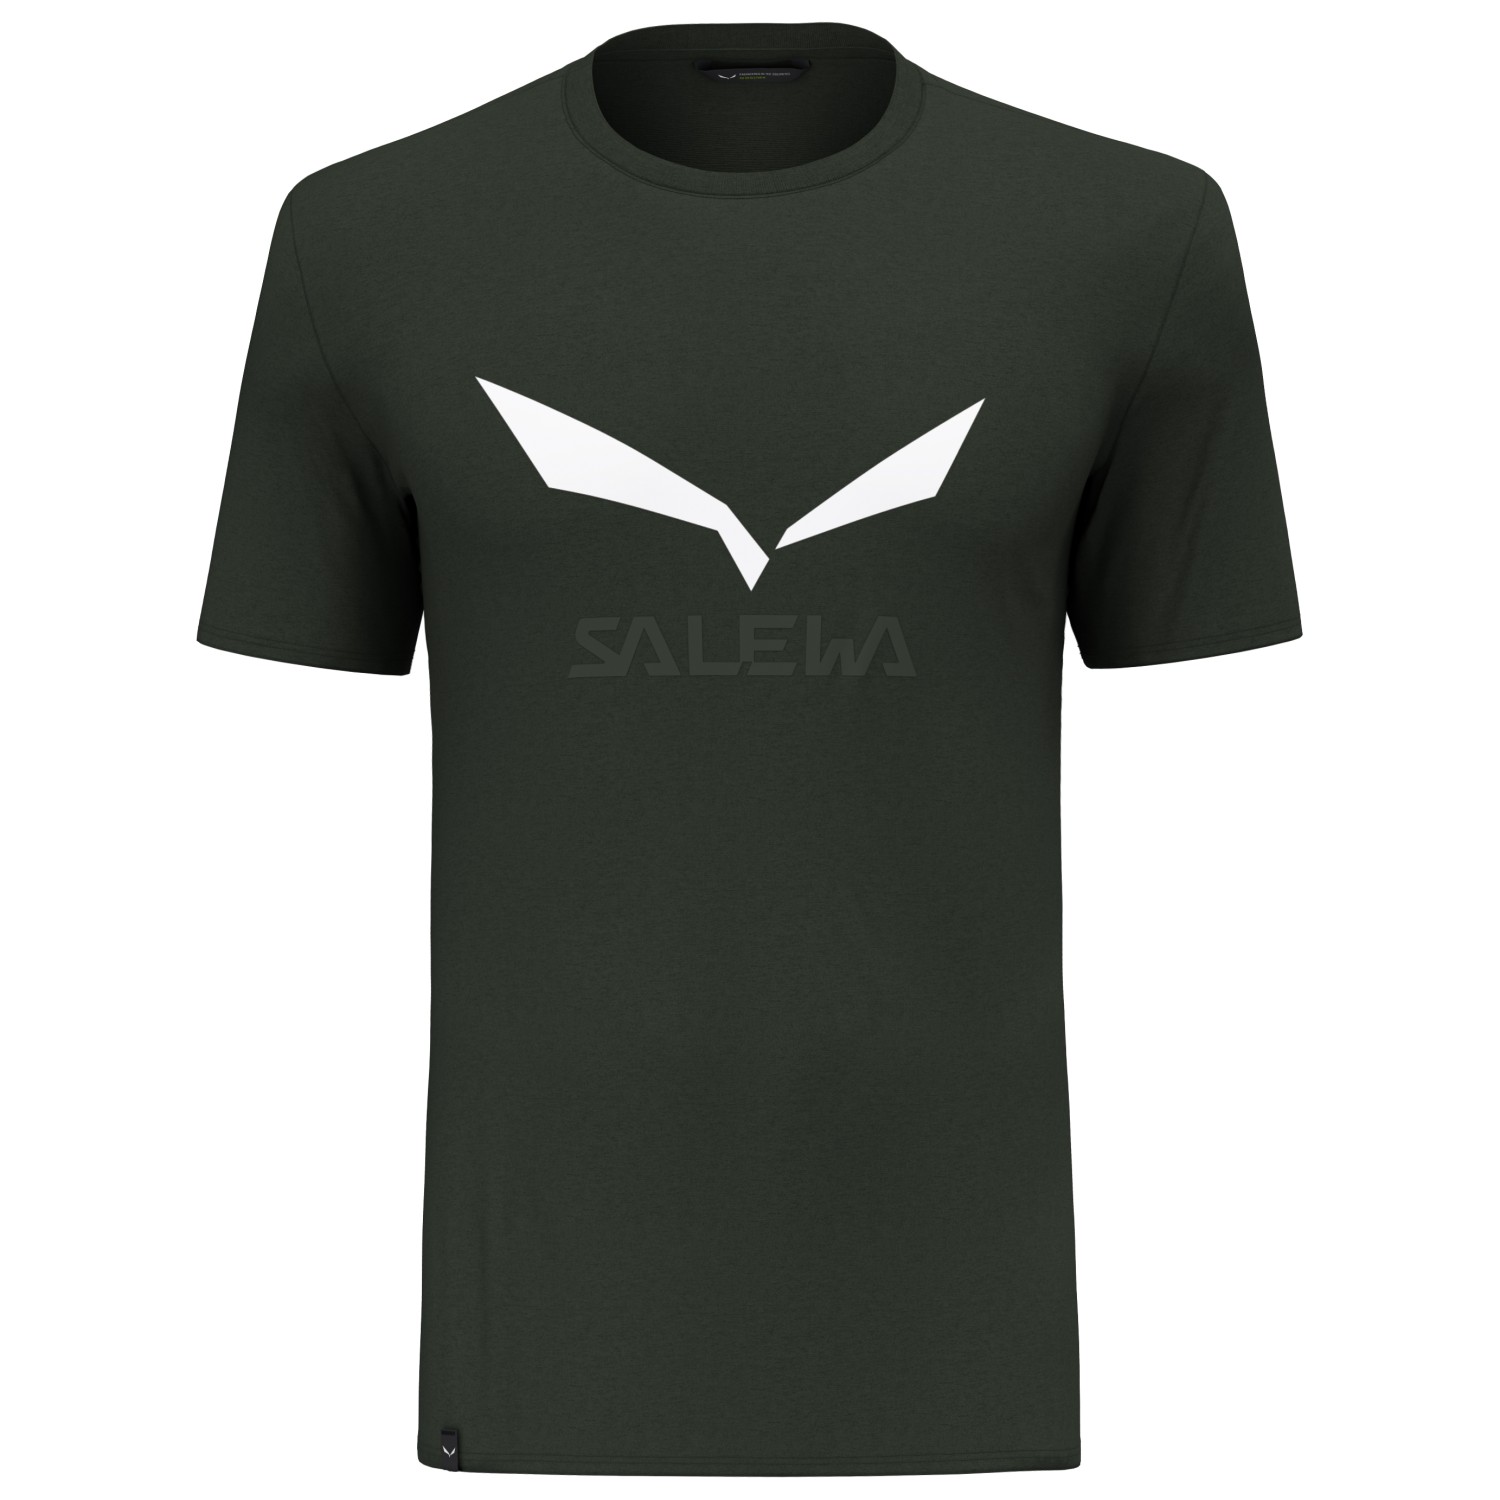 Функциональная рубашка Salewa Solidlogo Dry T Shirt, цвет Dark Olive Melange